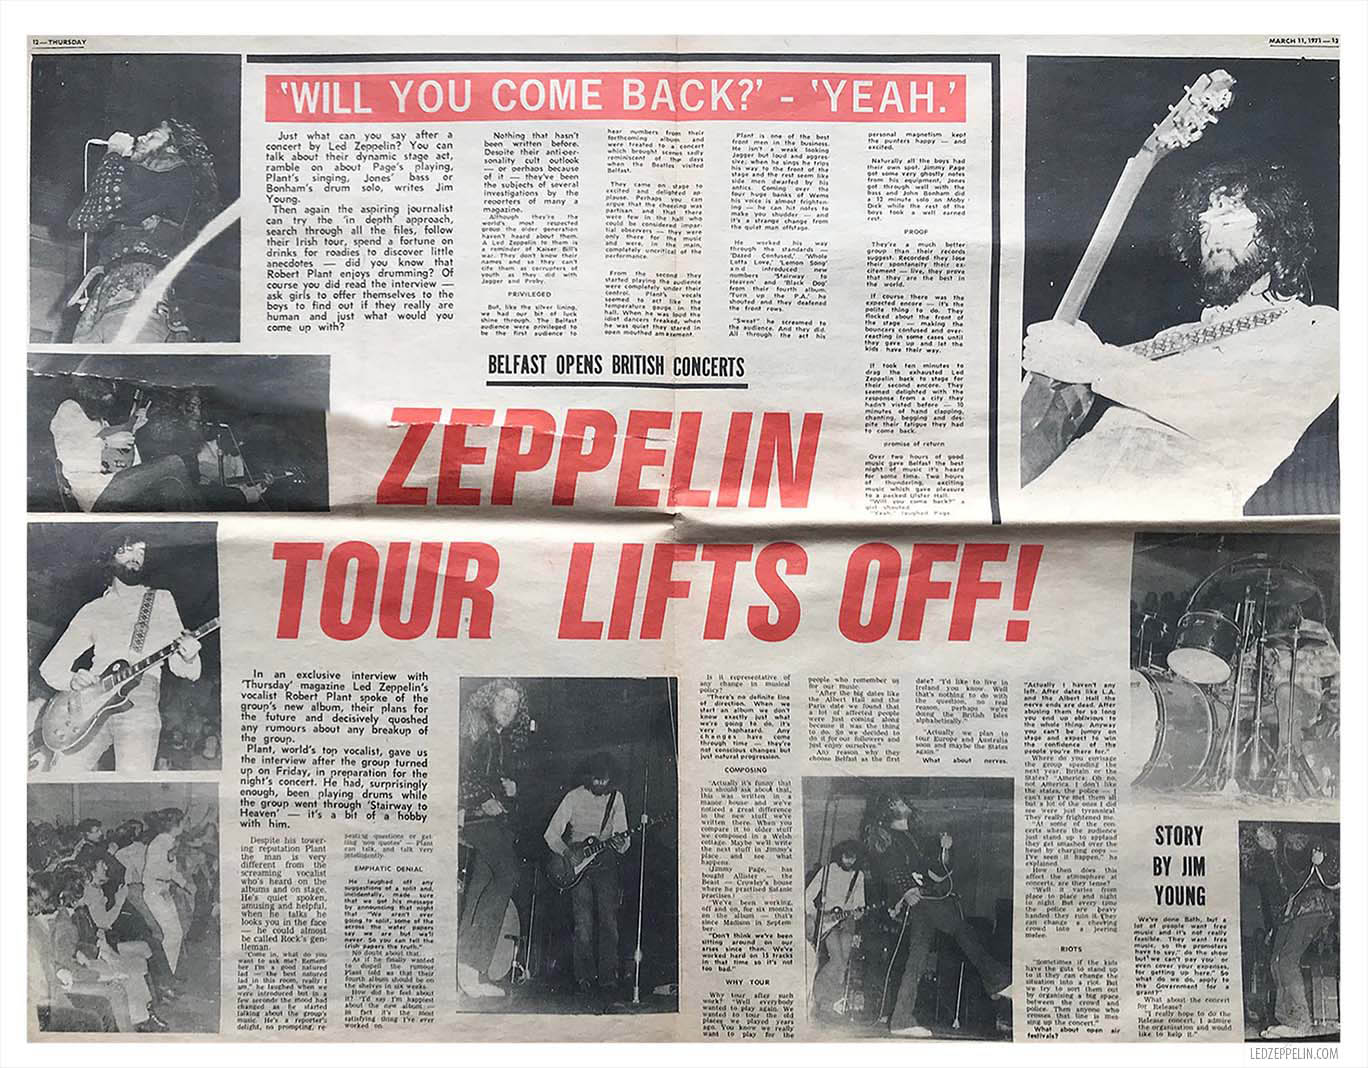 Belfast 1971 review (Zeppelin Tour Lifts Off)